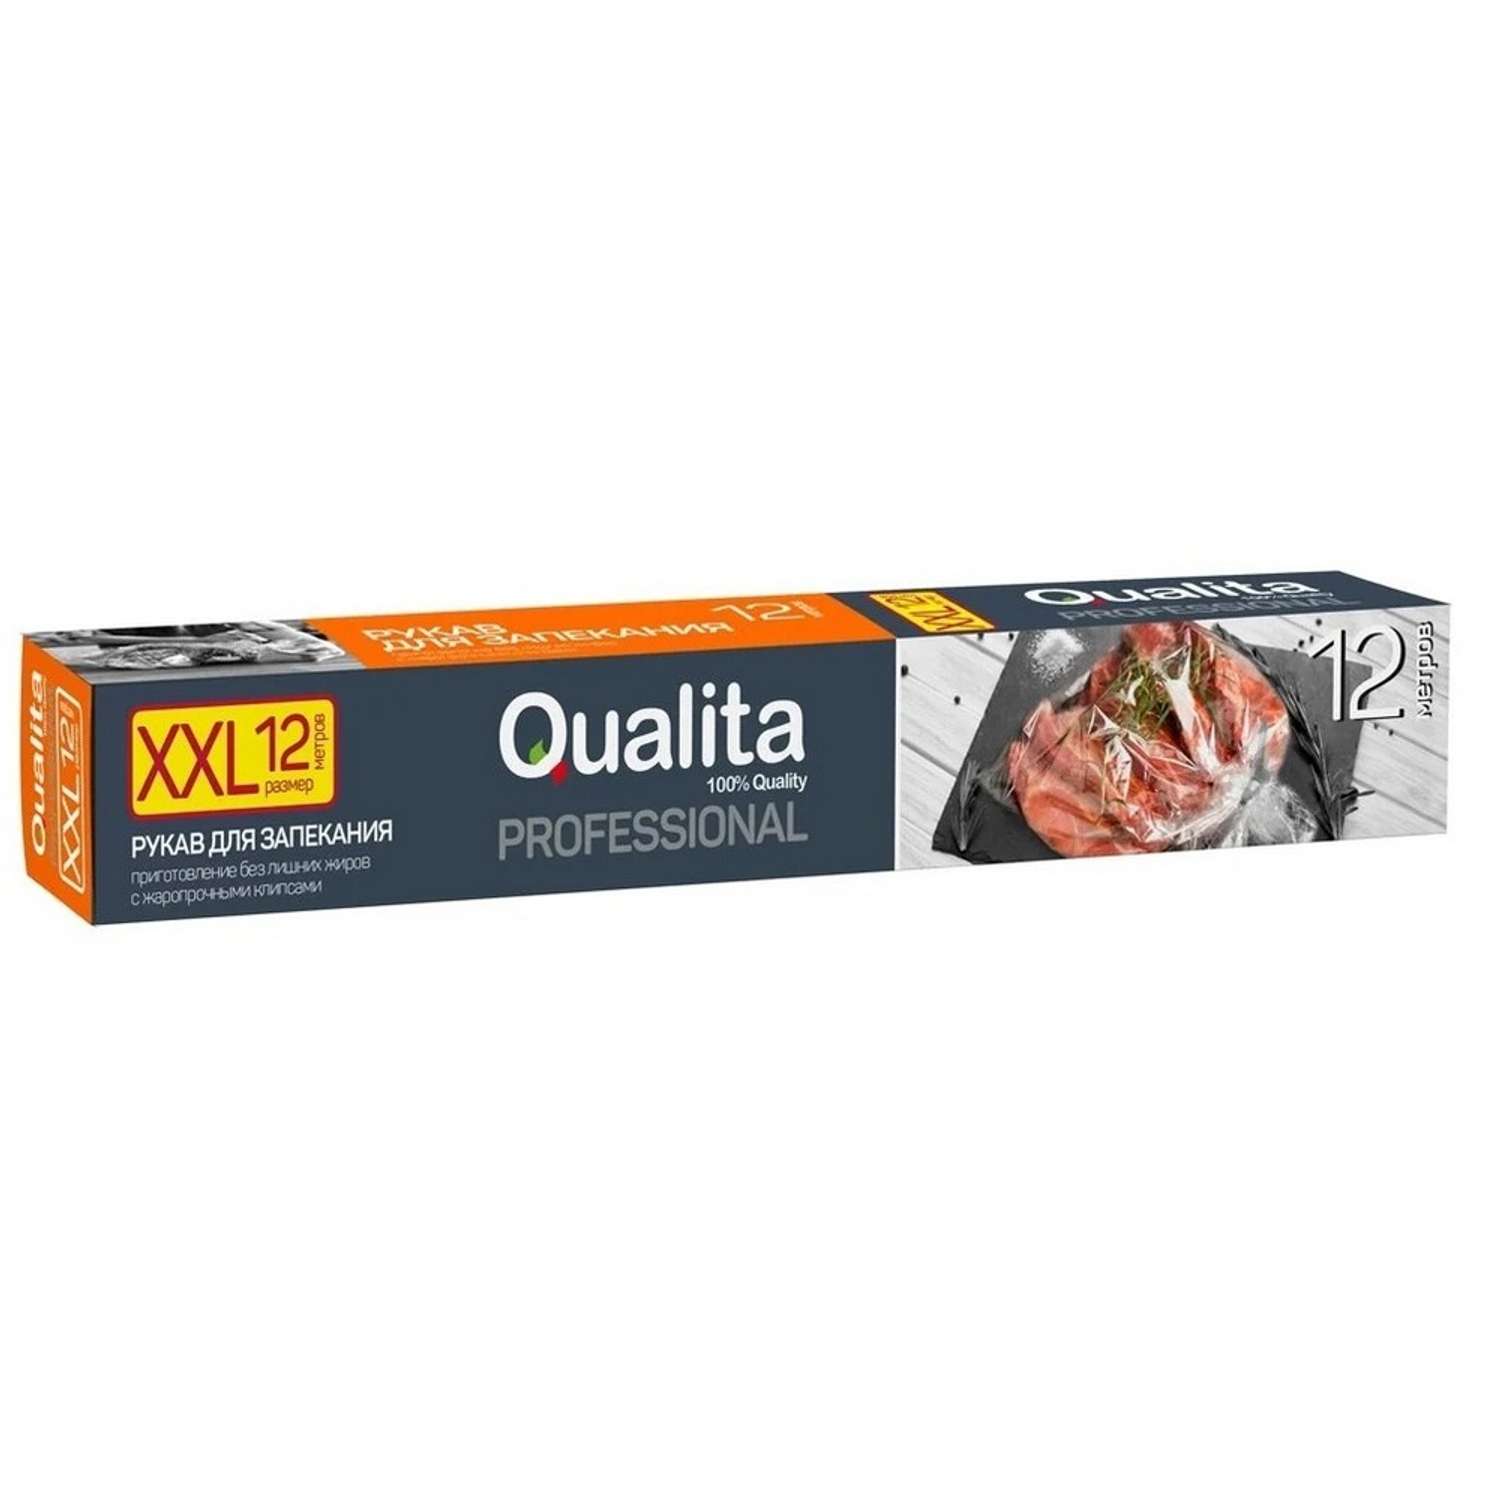 Рукав для запекания QUALITA Professional 10+2м в коробке - фото 1